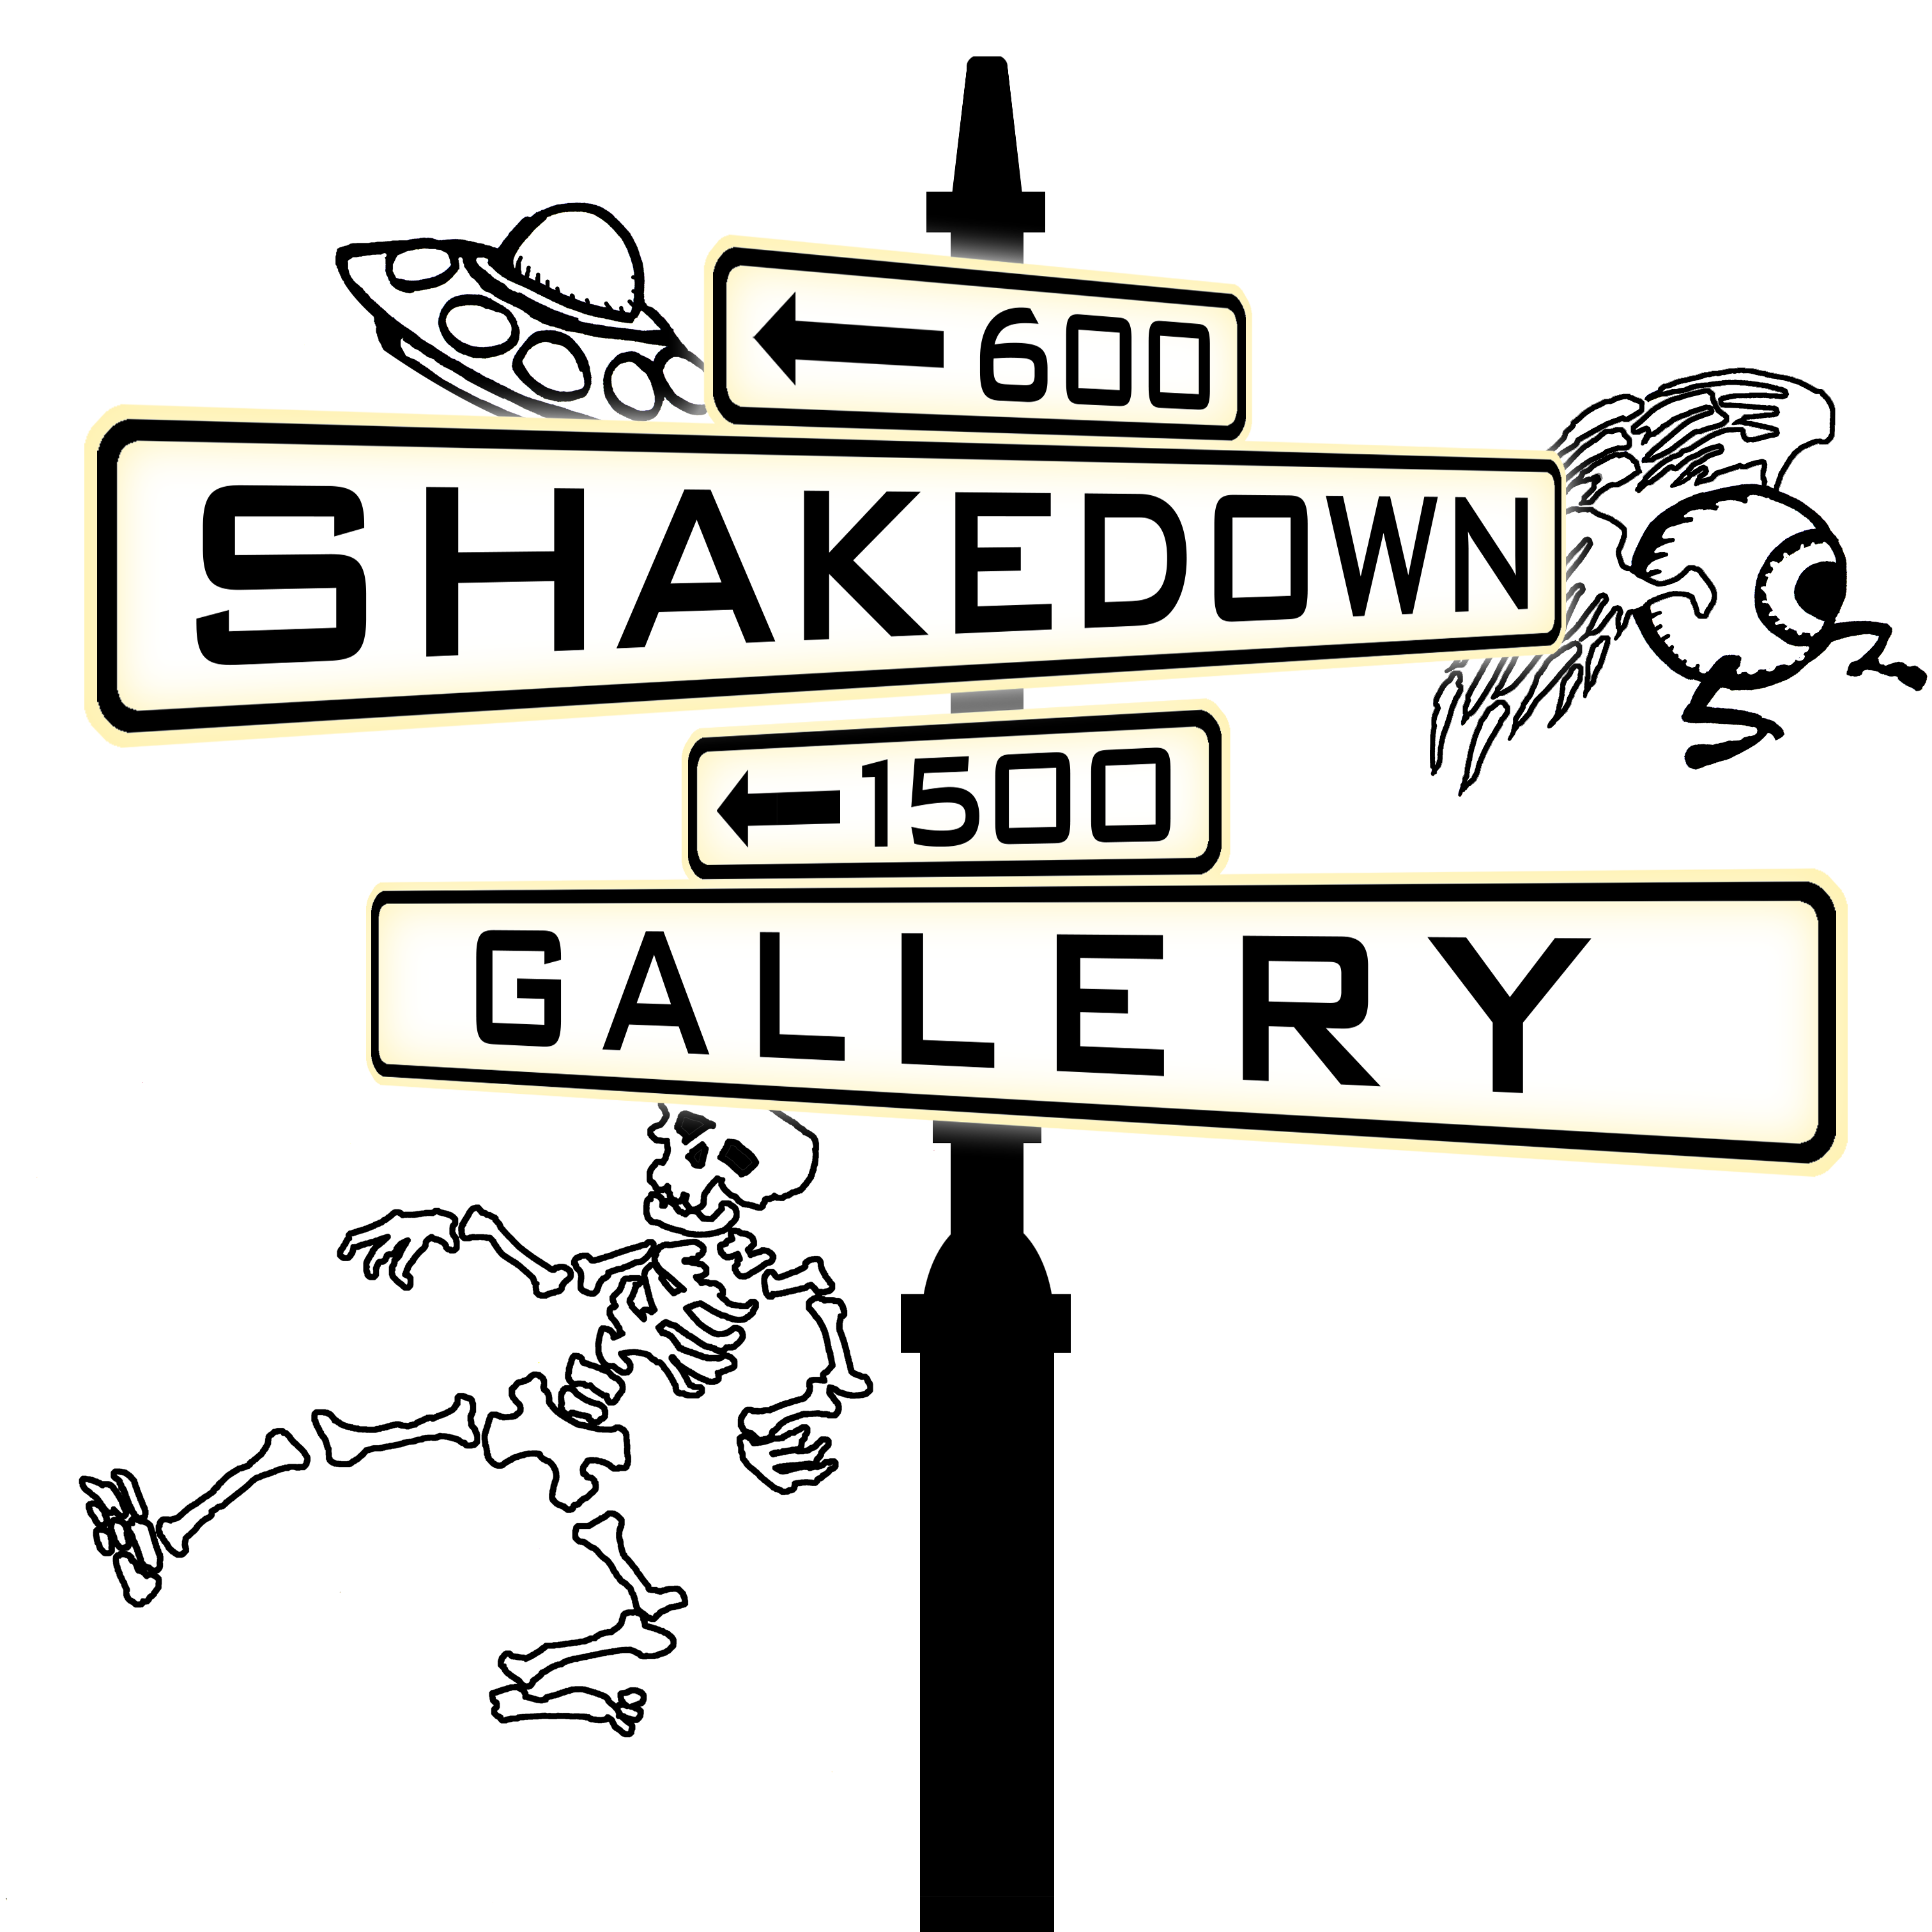 Shakedown Gallery